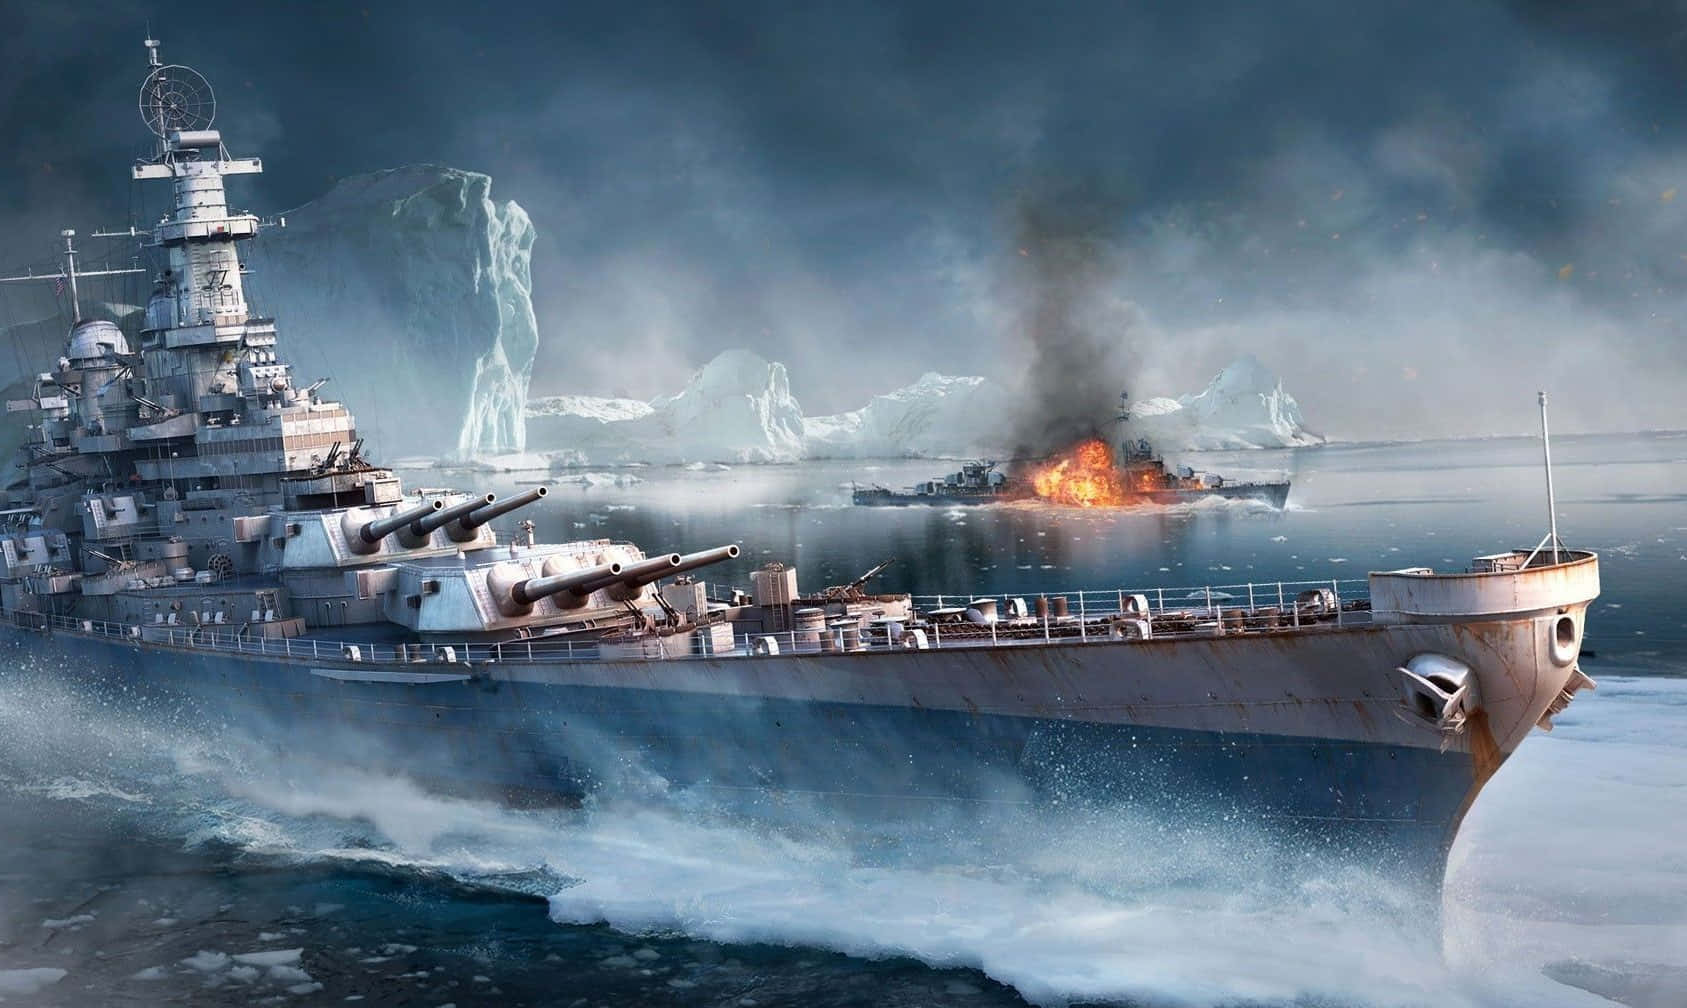 A modern battleship sailing on the open seas.